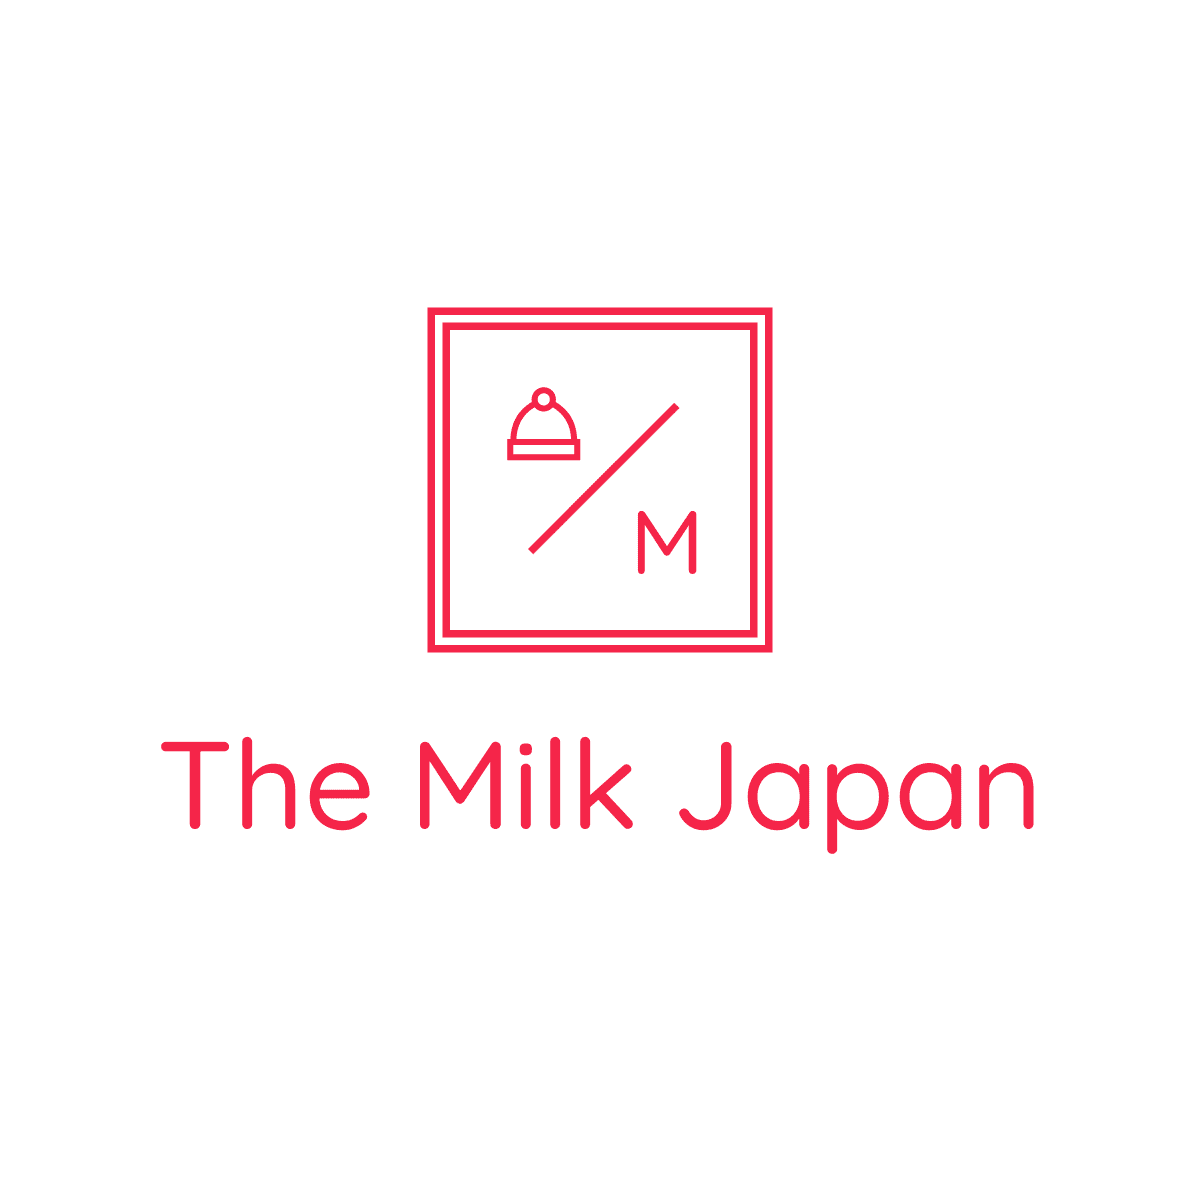 The Milk Japan